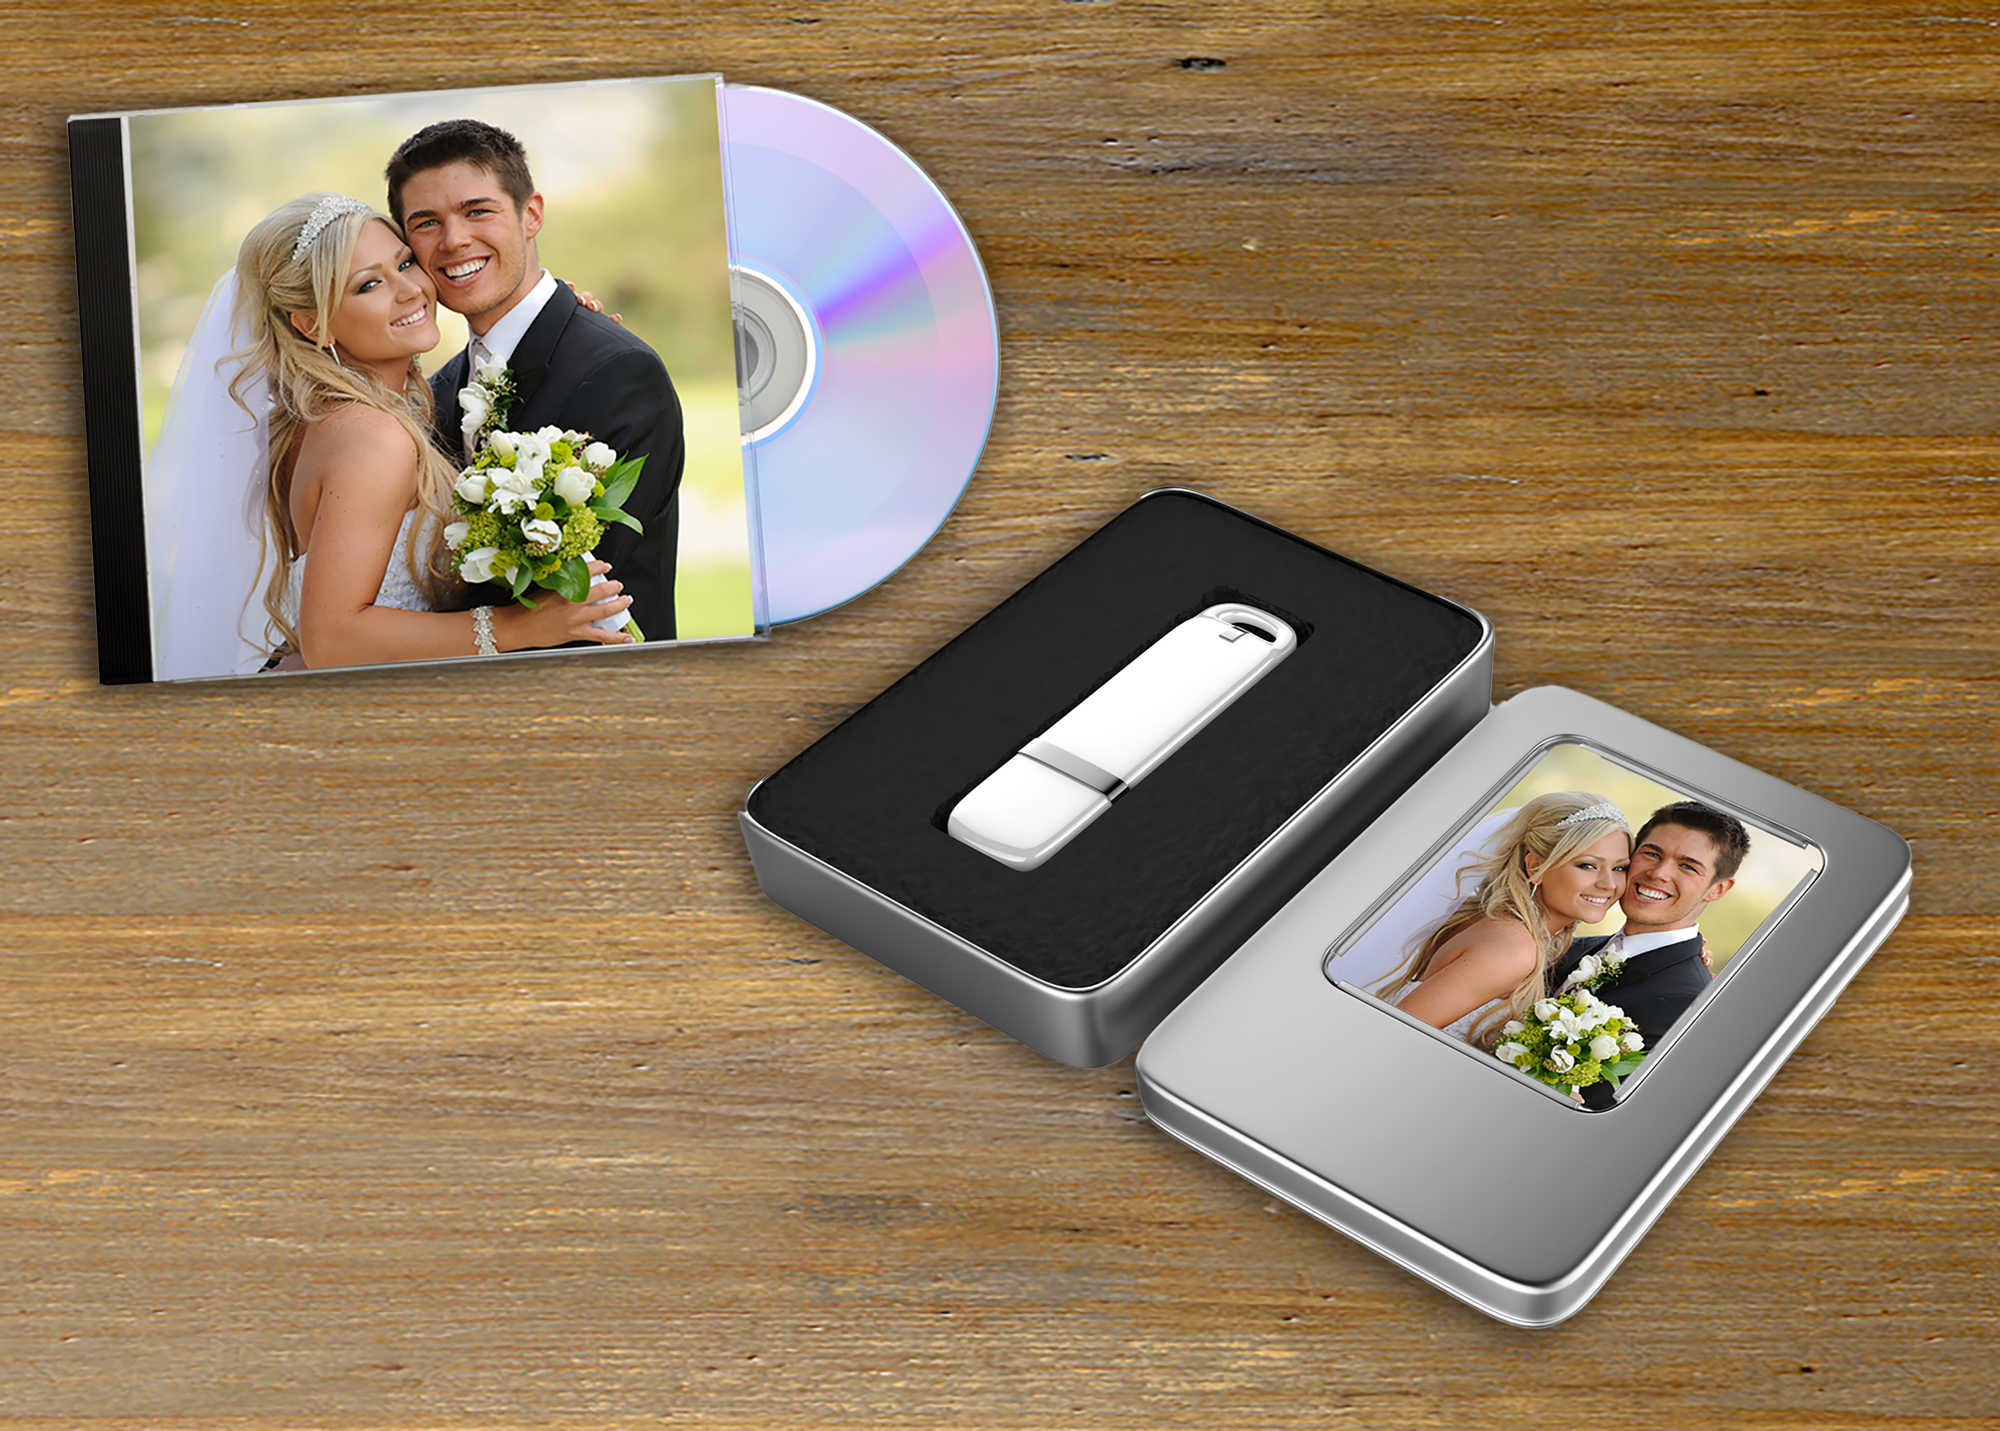 Wedding photos on CD and Flash Drive